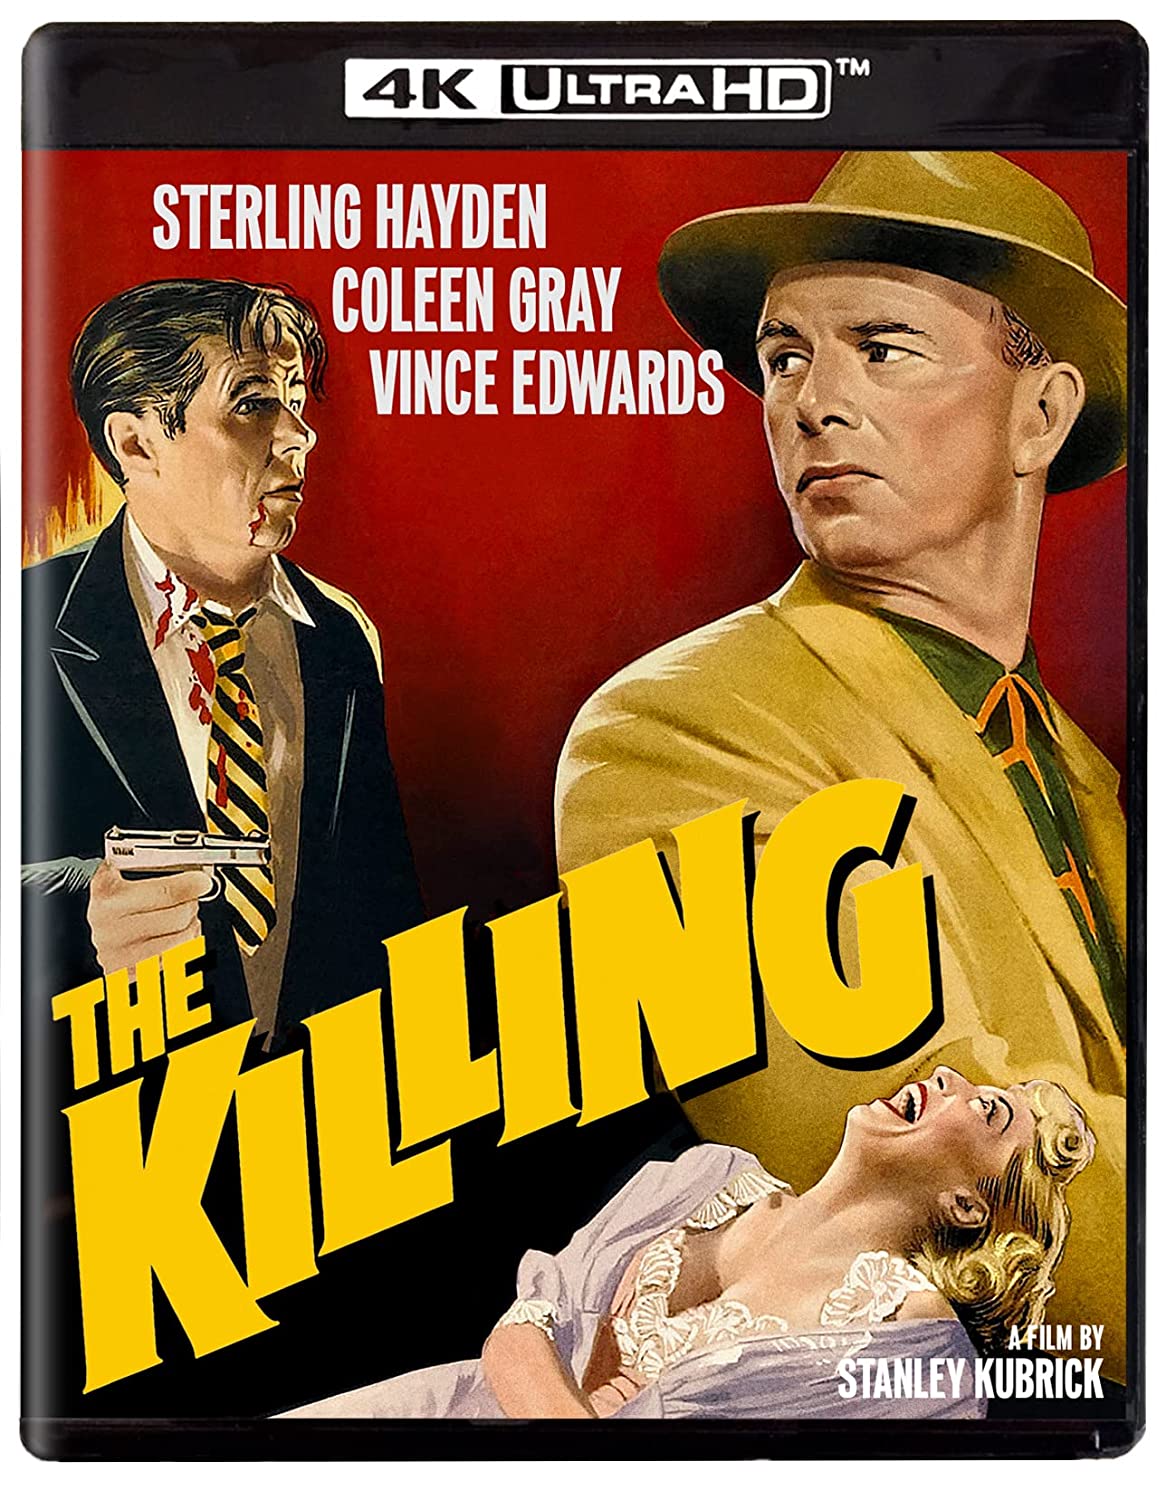 The Killing 4k Blu-ray cover b